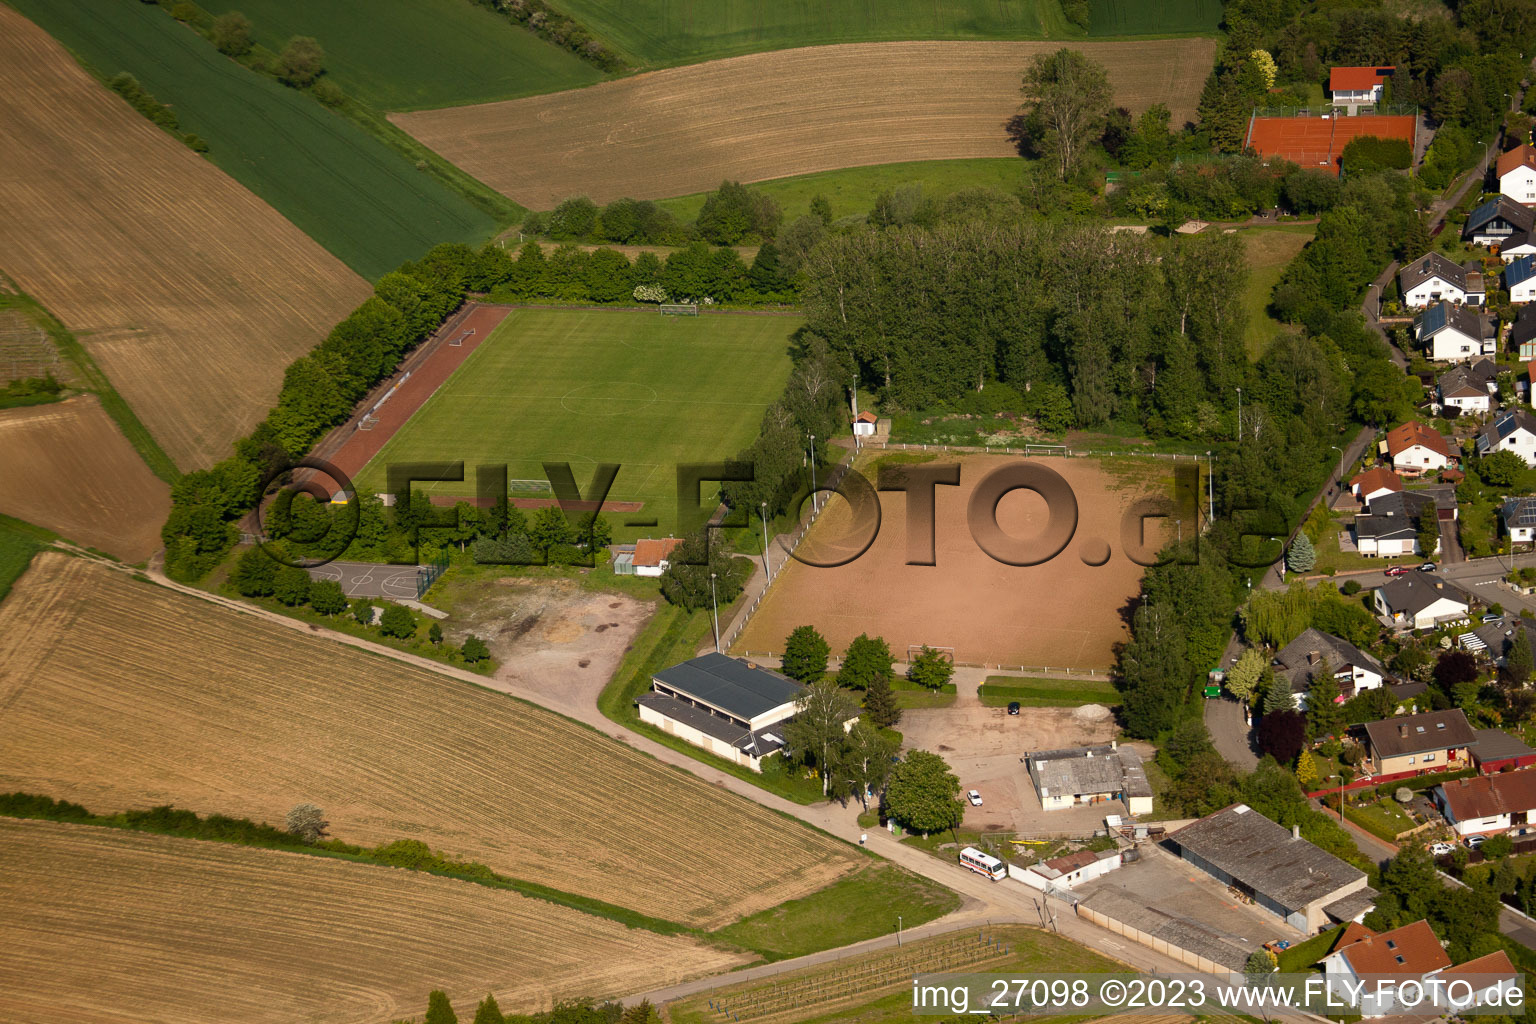 Sports ground in Insheim in the state Rhineland-Palatinate, Germany